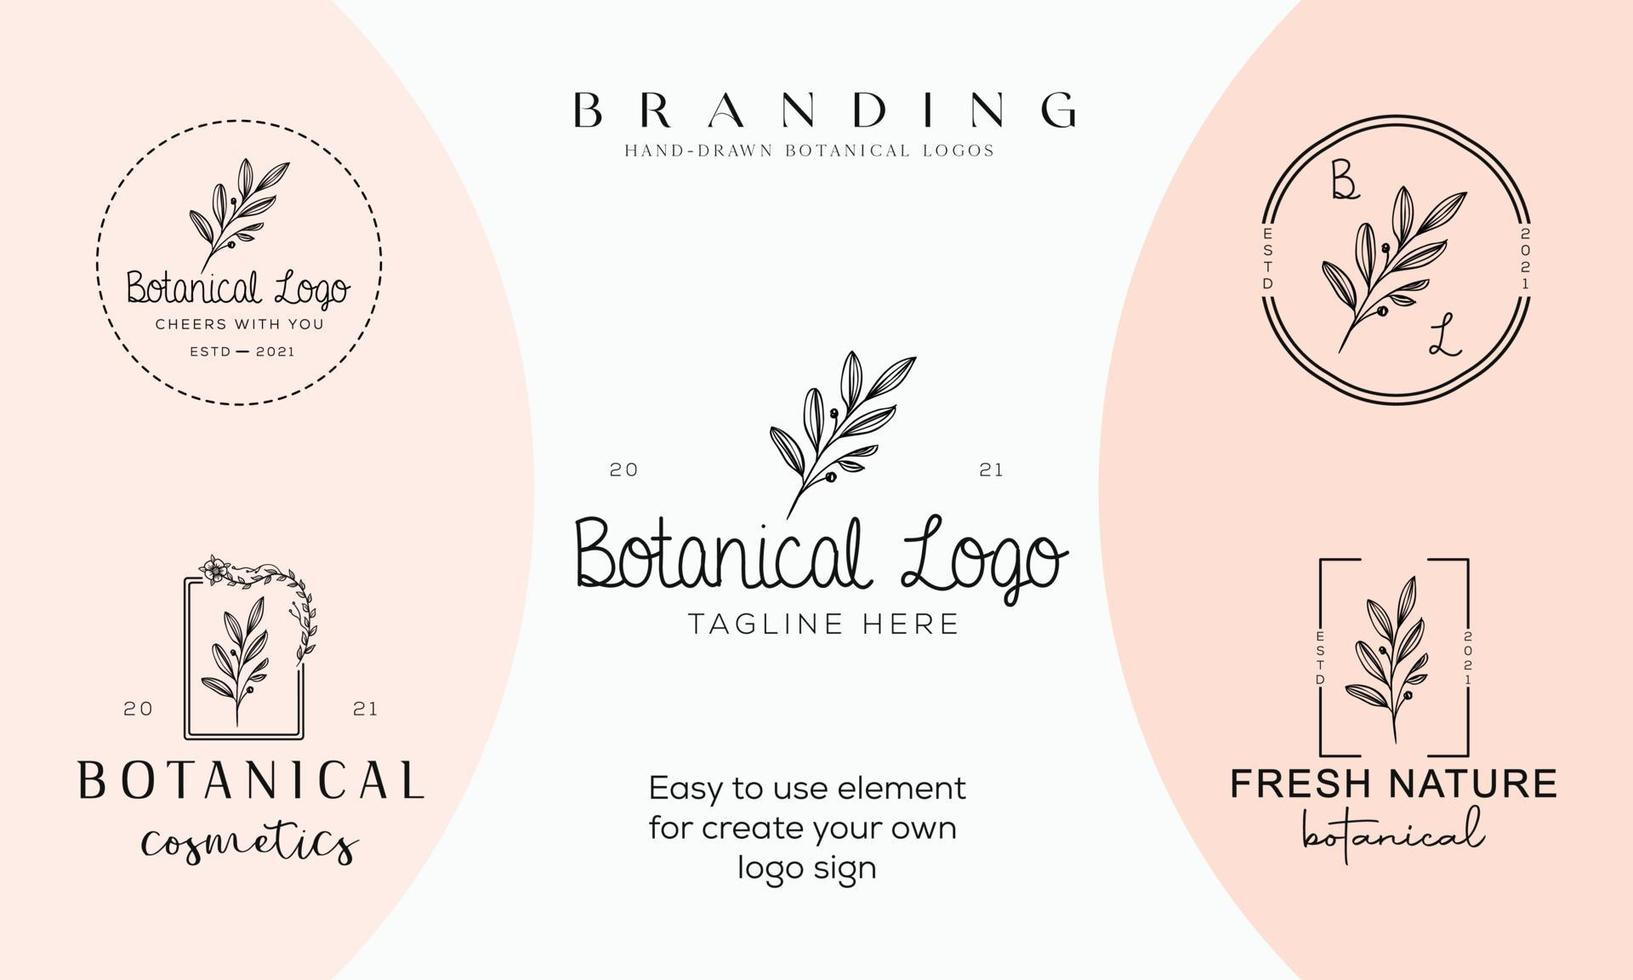 Hand drawn floral botanical logo bundle illustration collection for beauty, natural, organic Premium Vector